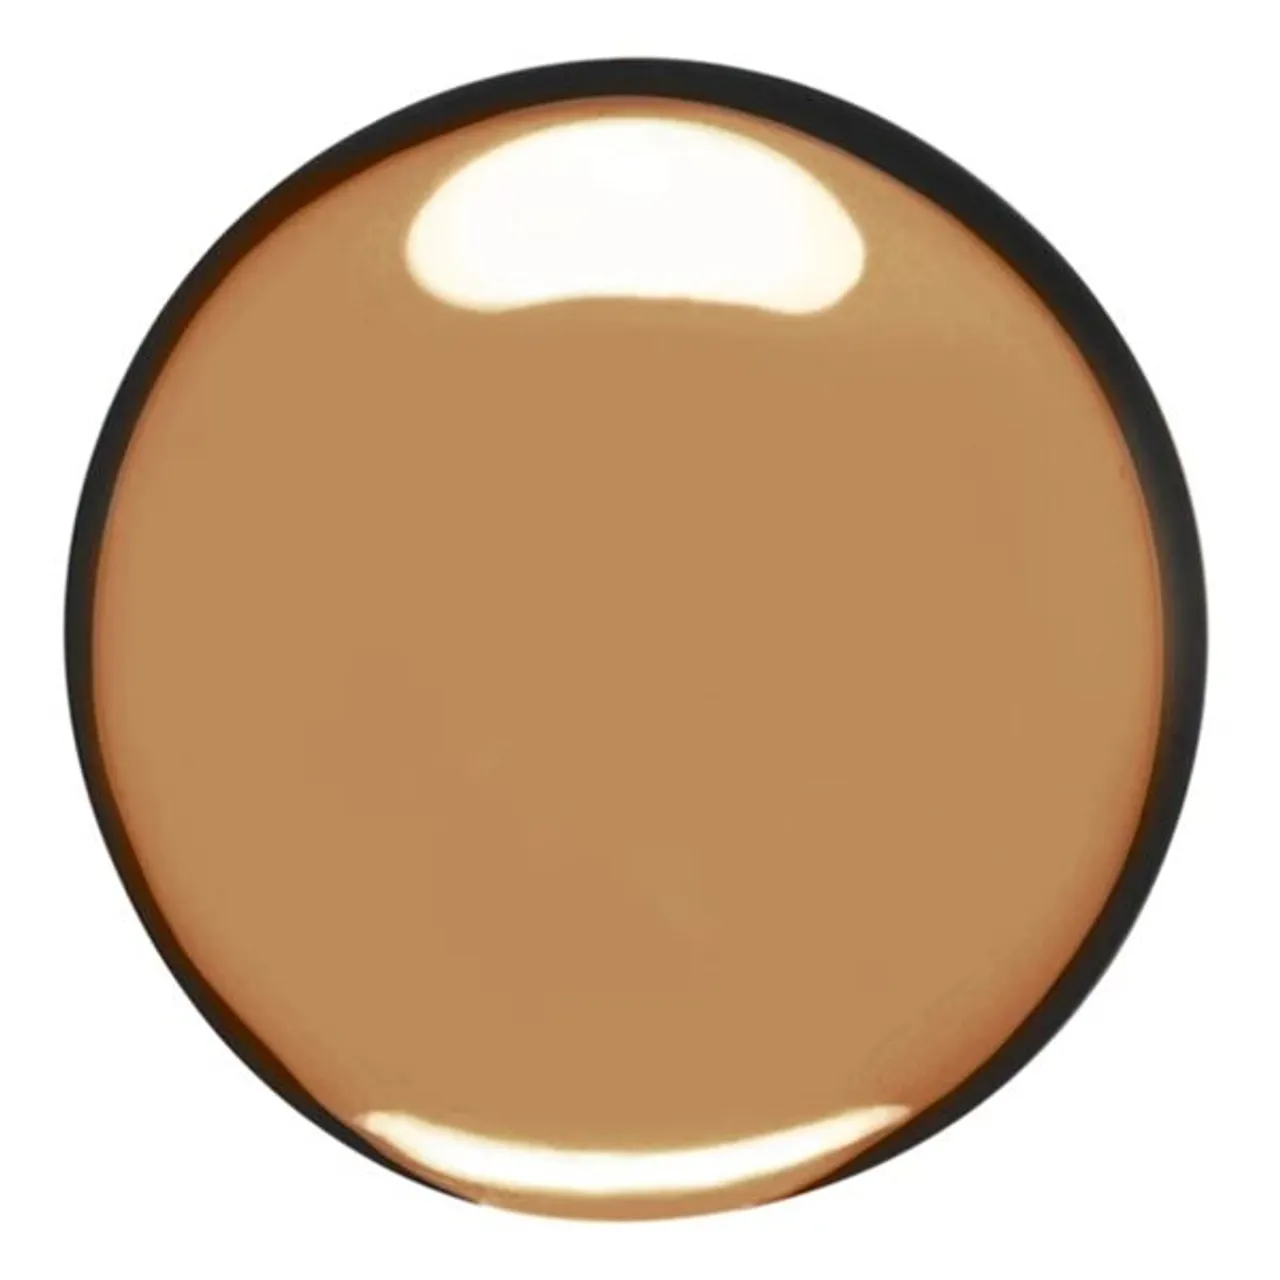 Clarins Skin Illusion Foundation SPF 15 - 116.5 Coffee - Unisex - Size: 30ml